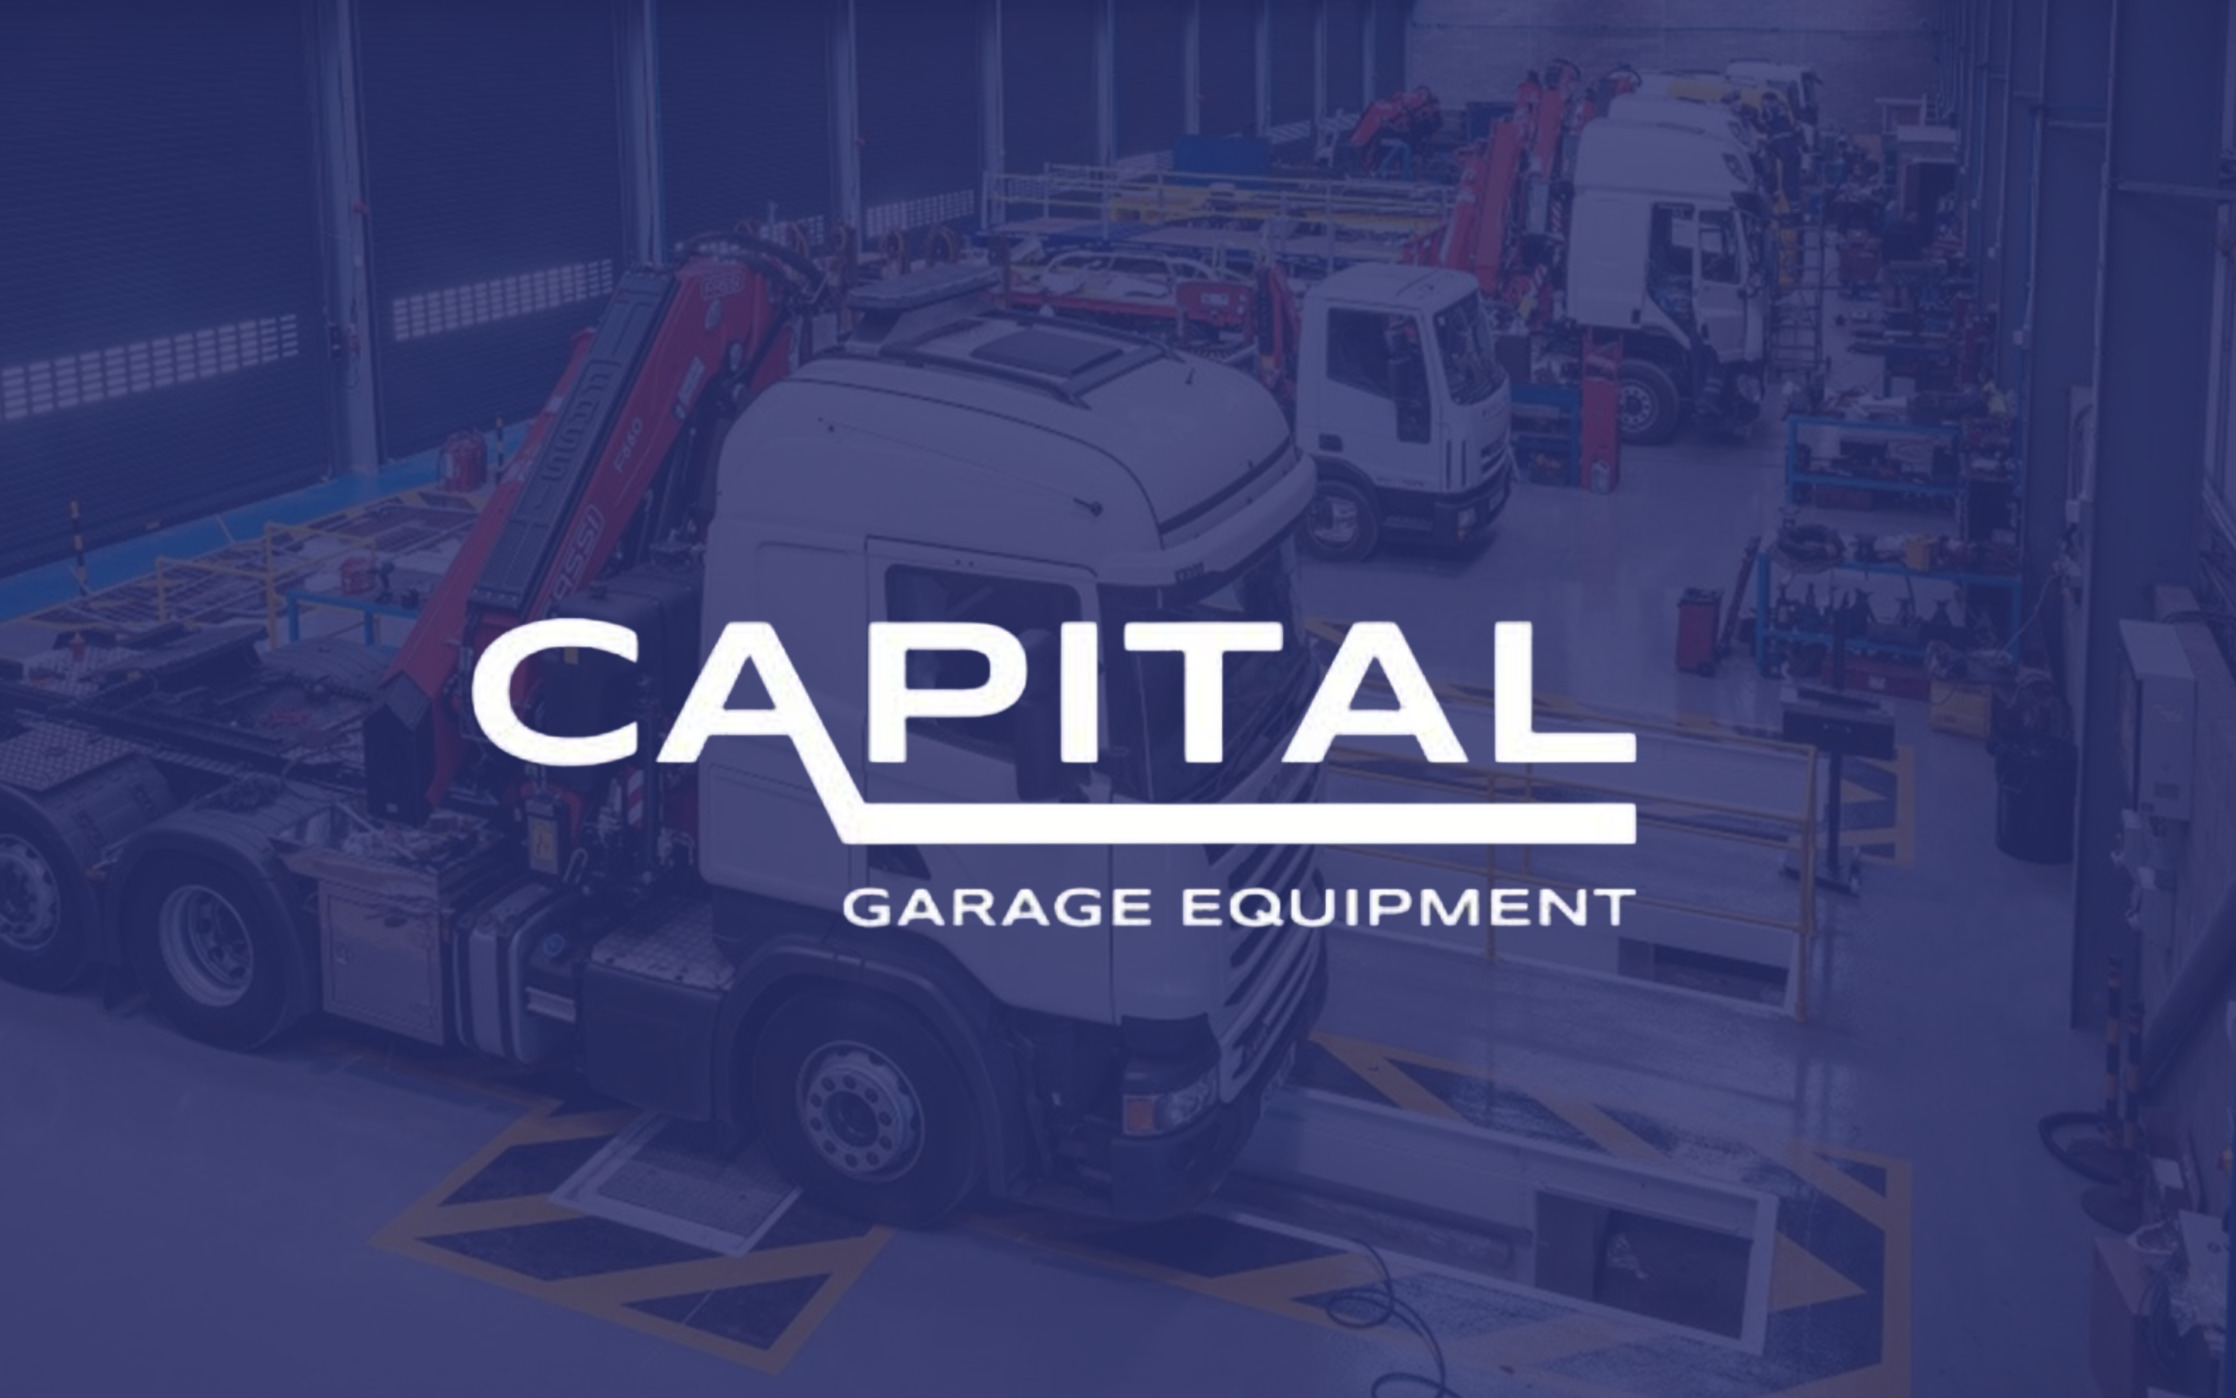 Capital Garage Equipment Limited